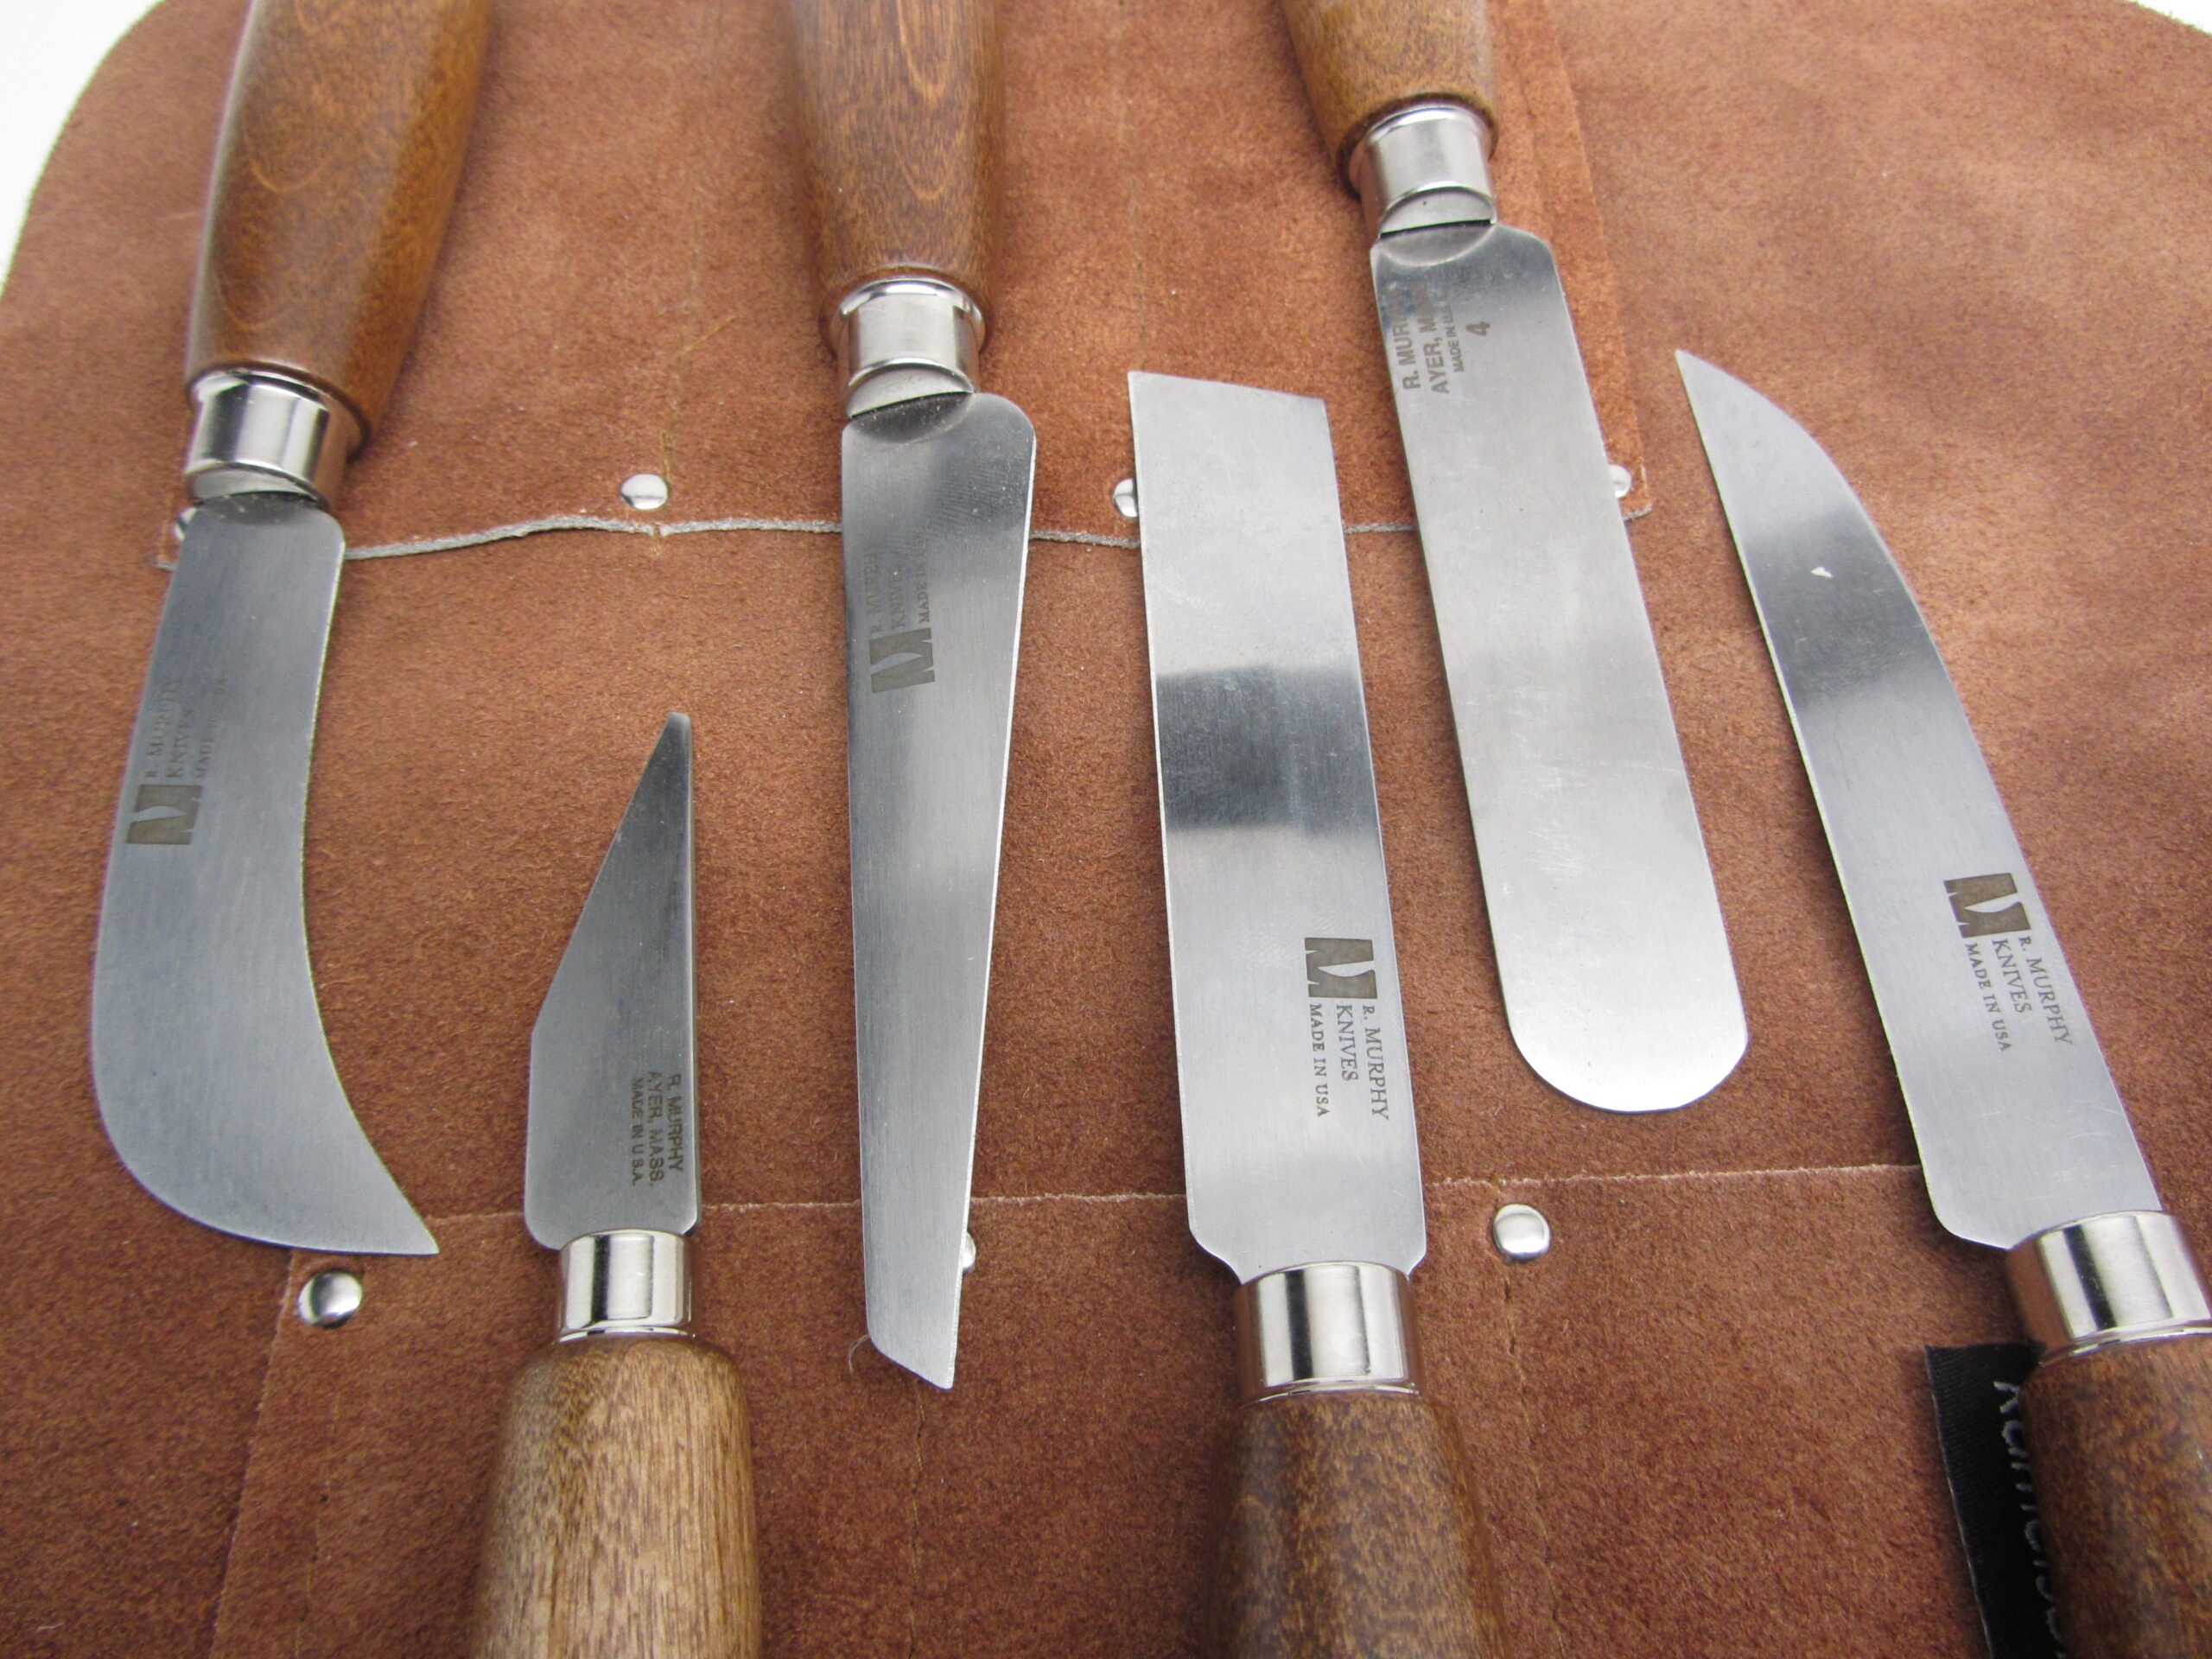 KNIVES For SHOE REPAIR / R. Murphy & Dexter Knives